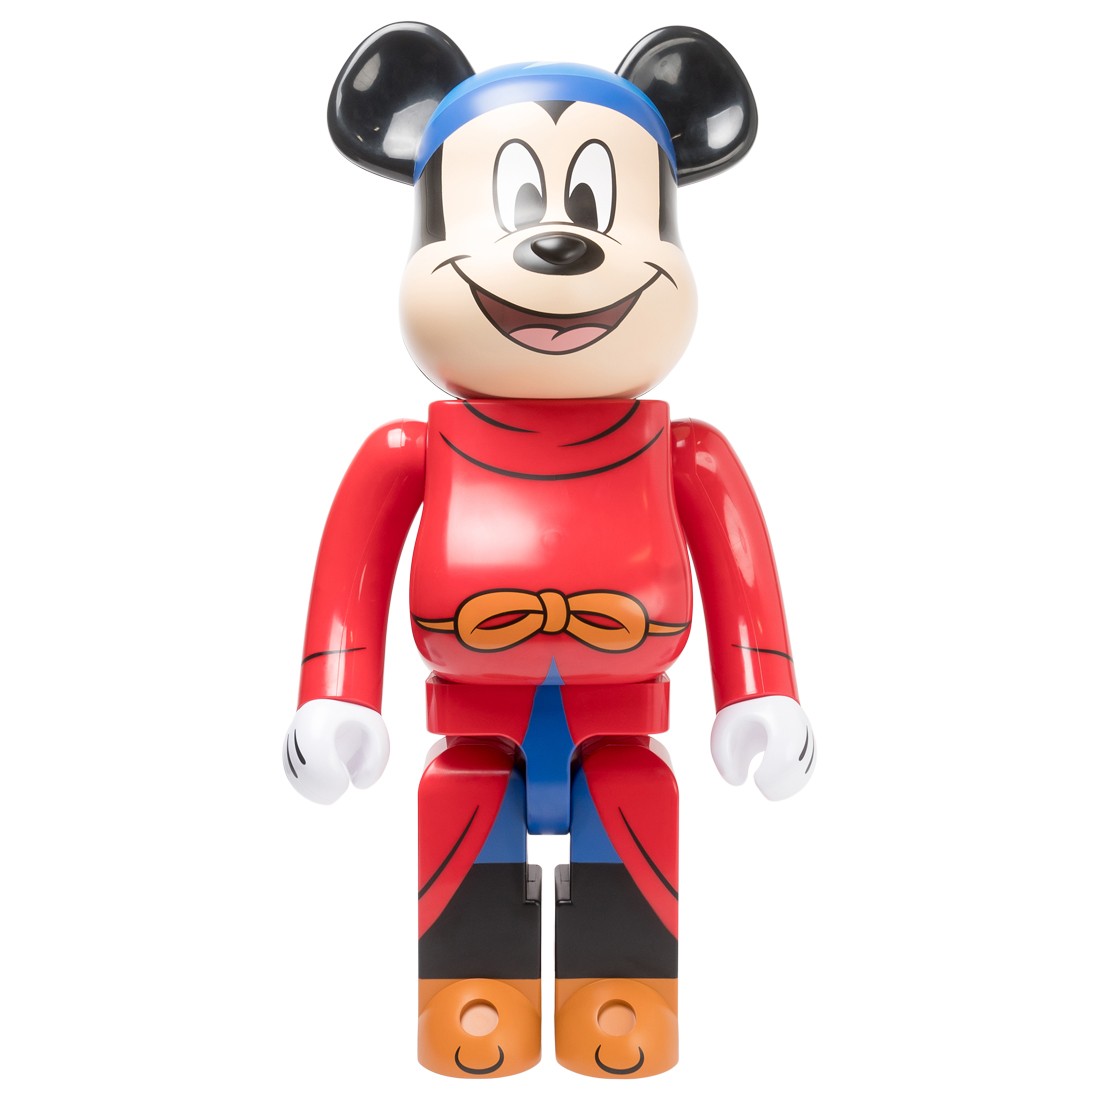 Medicom Disney Fantasia Mickey Mouse 1000% Bearbrick Figure (red)